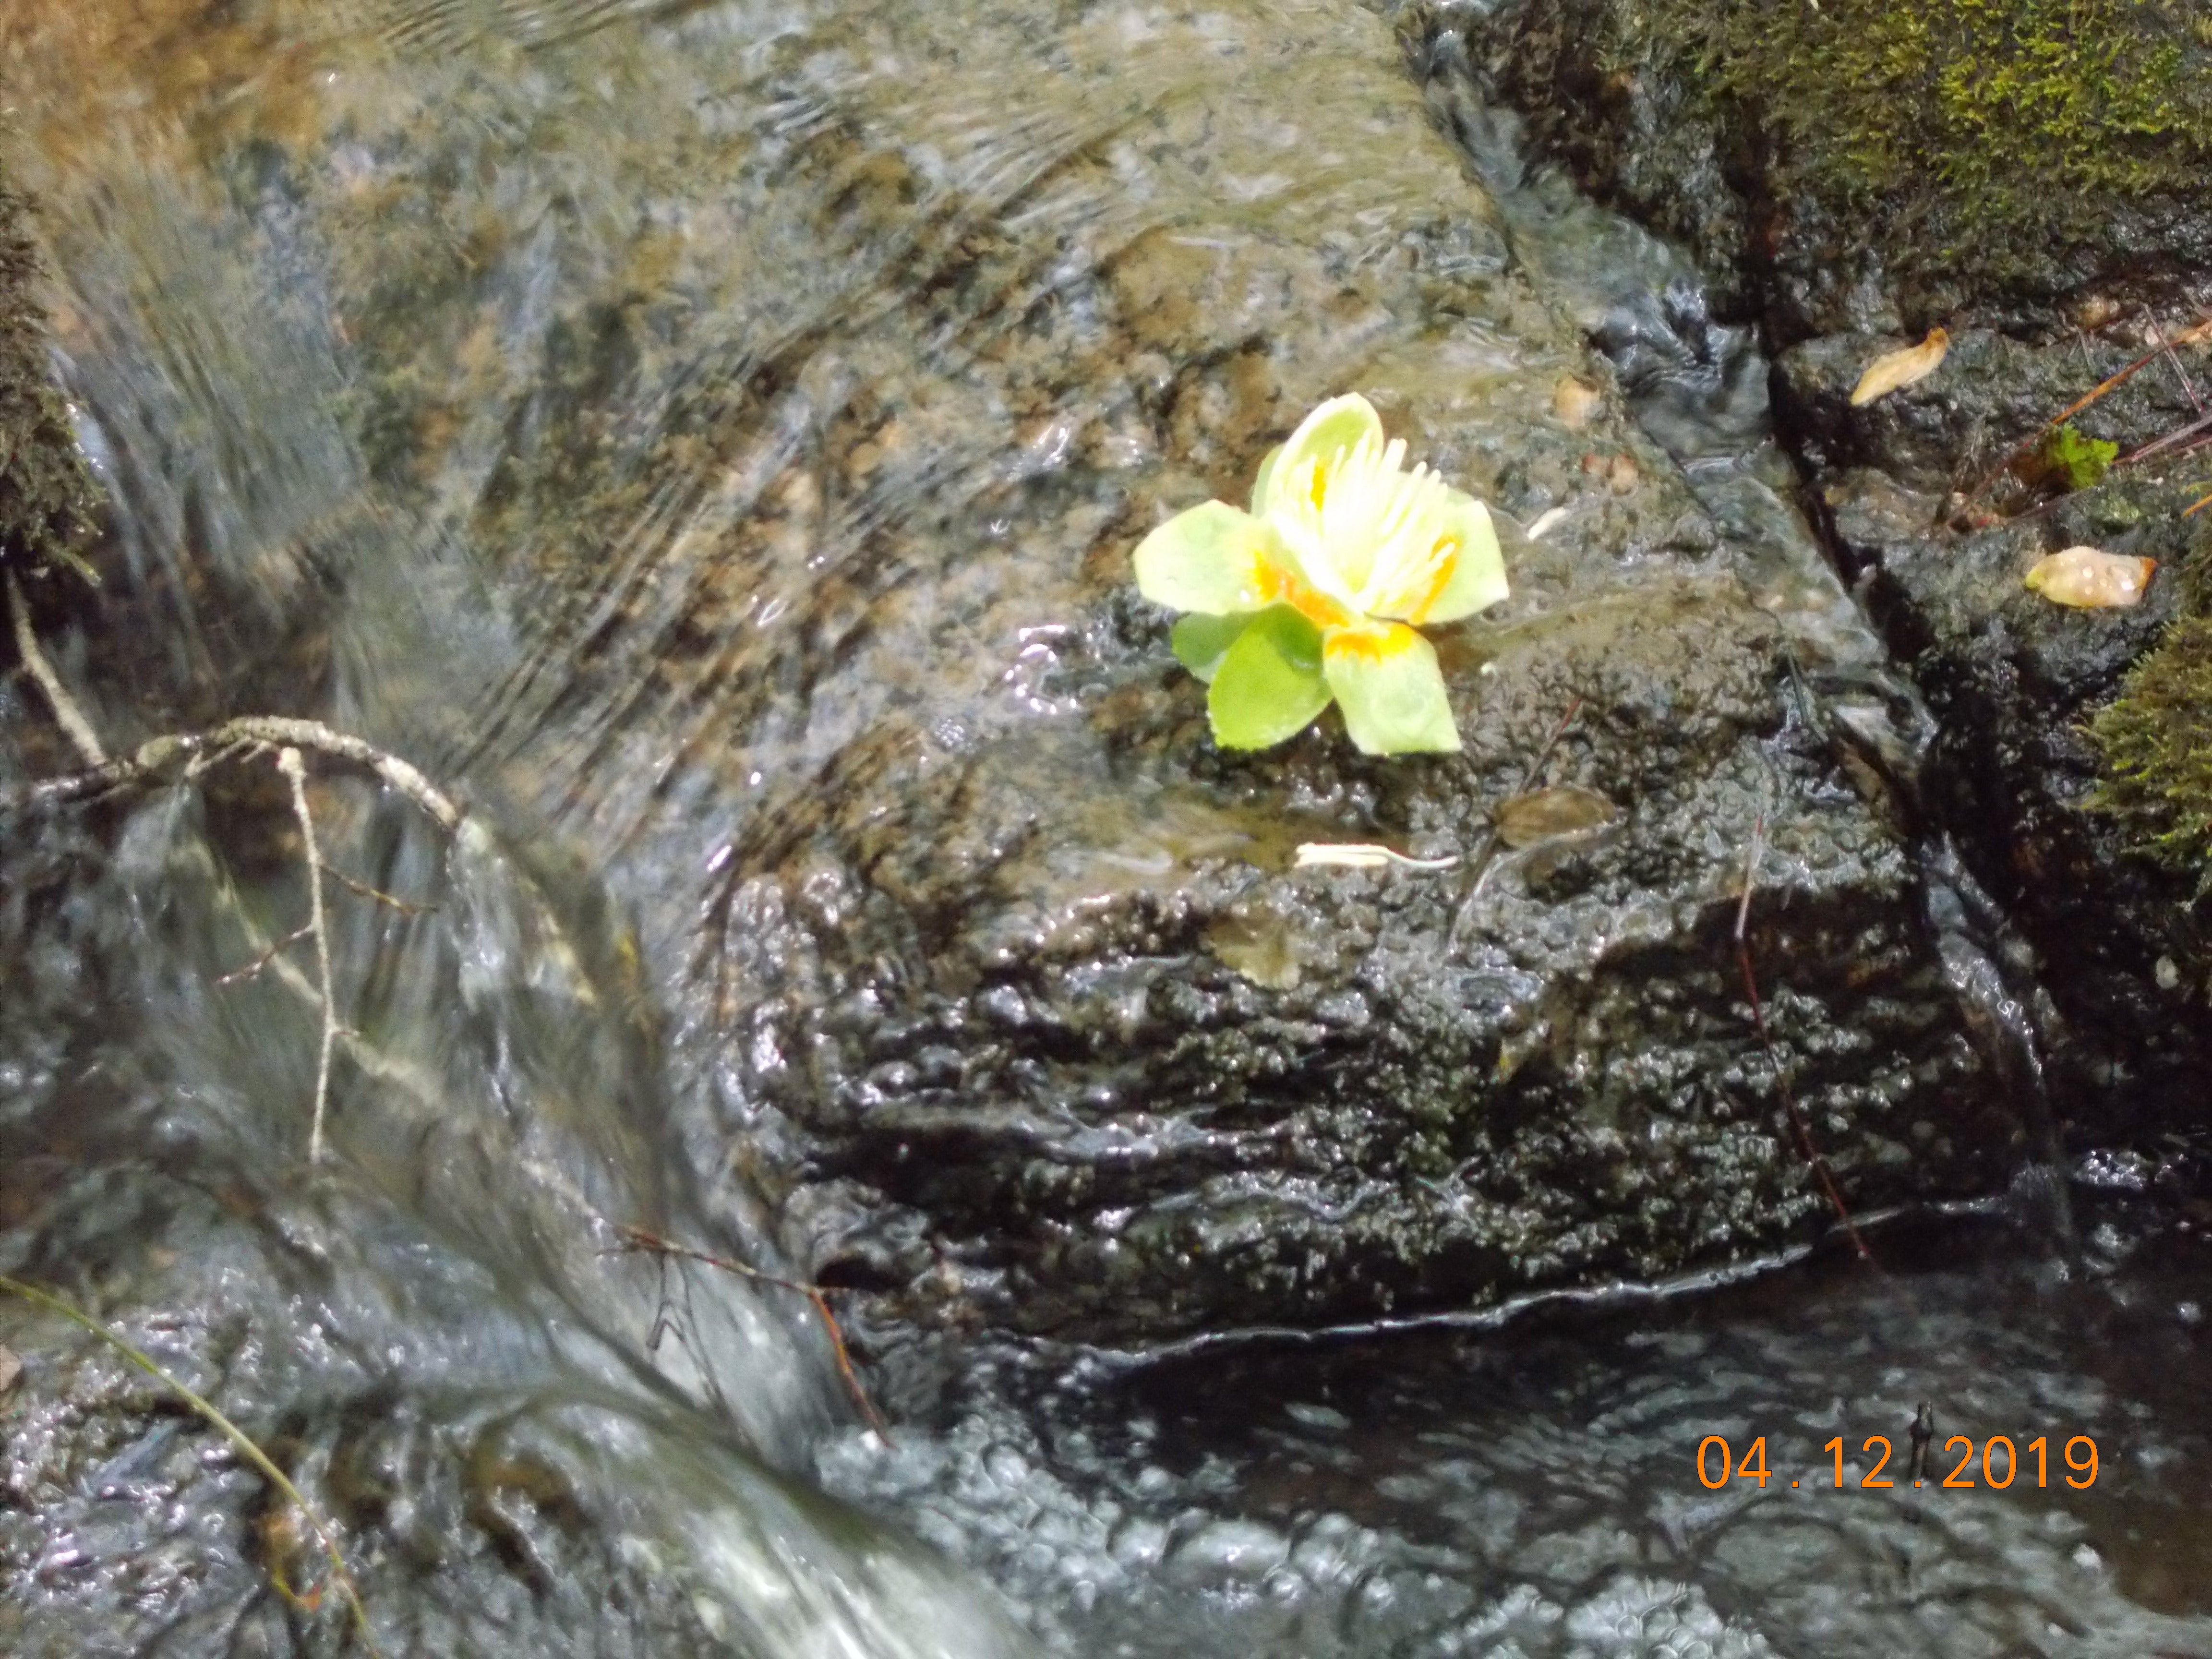 Flower beside stream on hiking trail.